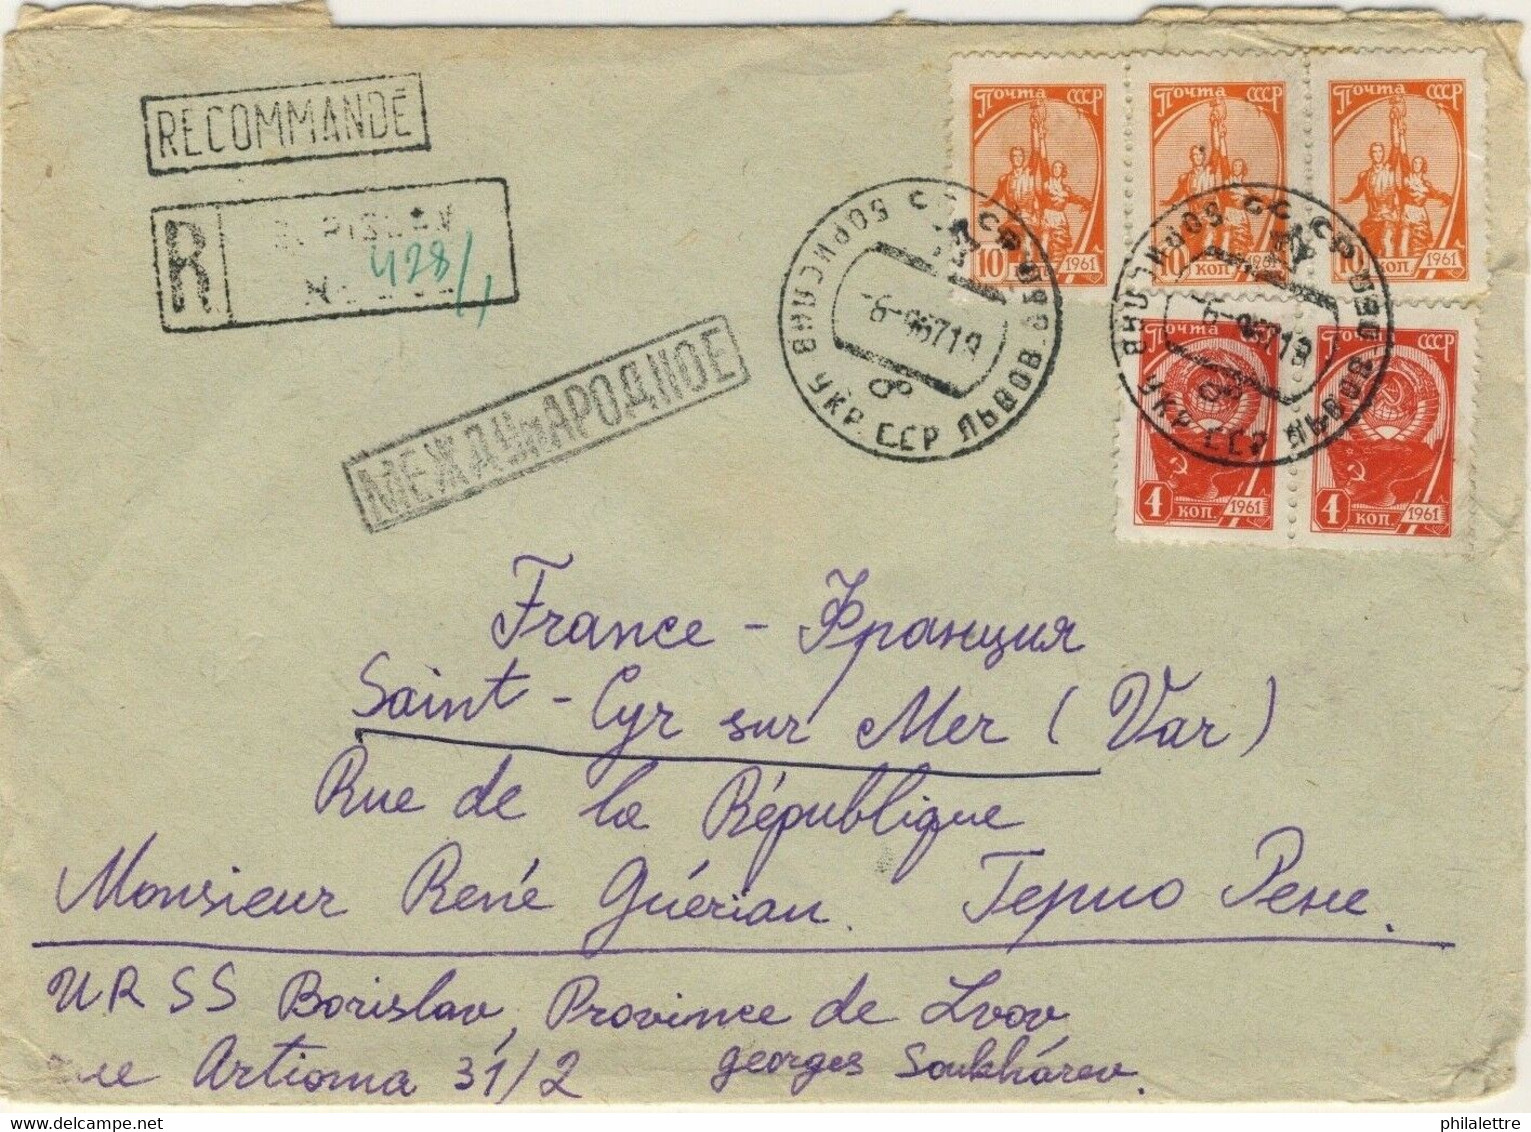 URSS Soviet Union 1967 Mi.2437x (x2) & 2439x (x3) On Registered Cover To France - Brieven En Documenten